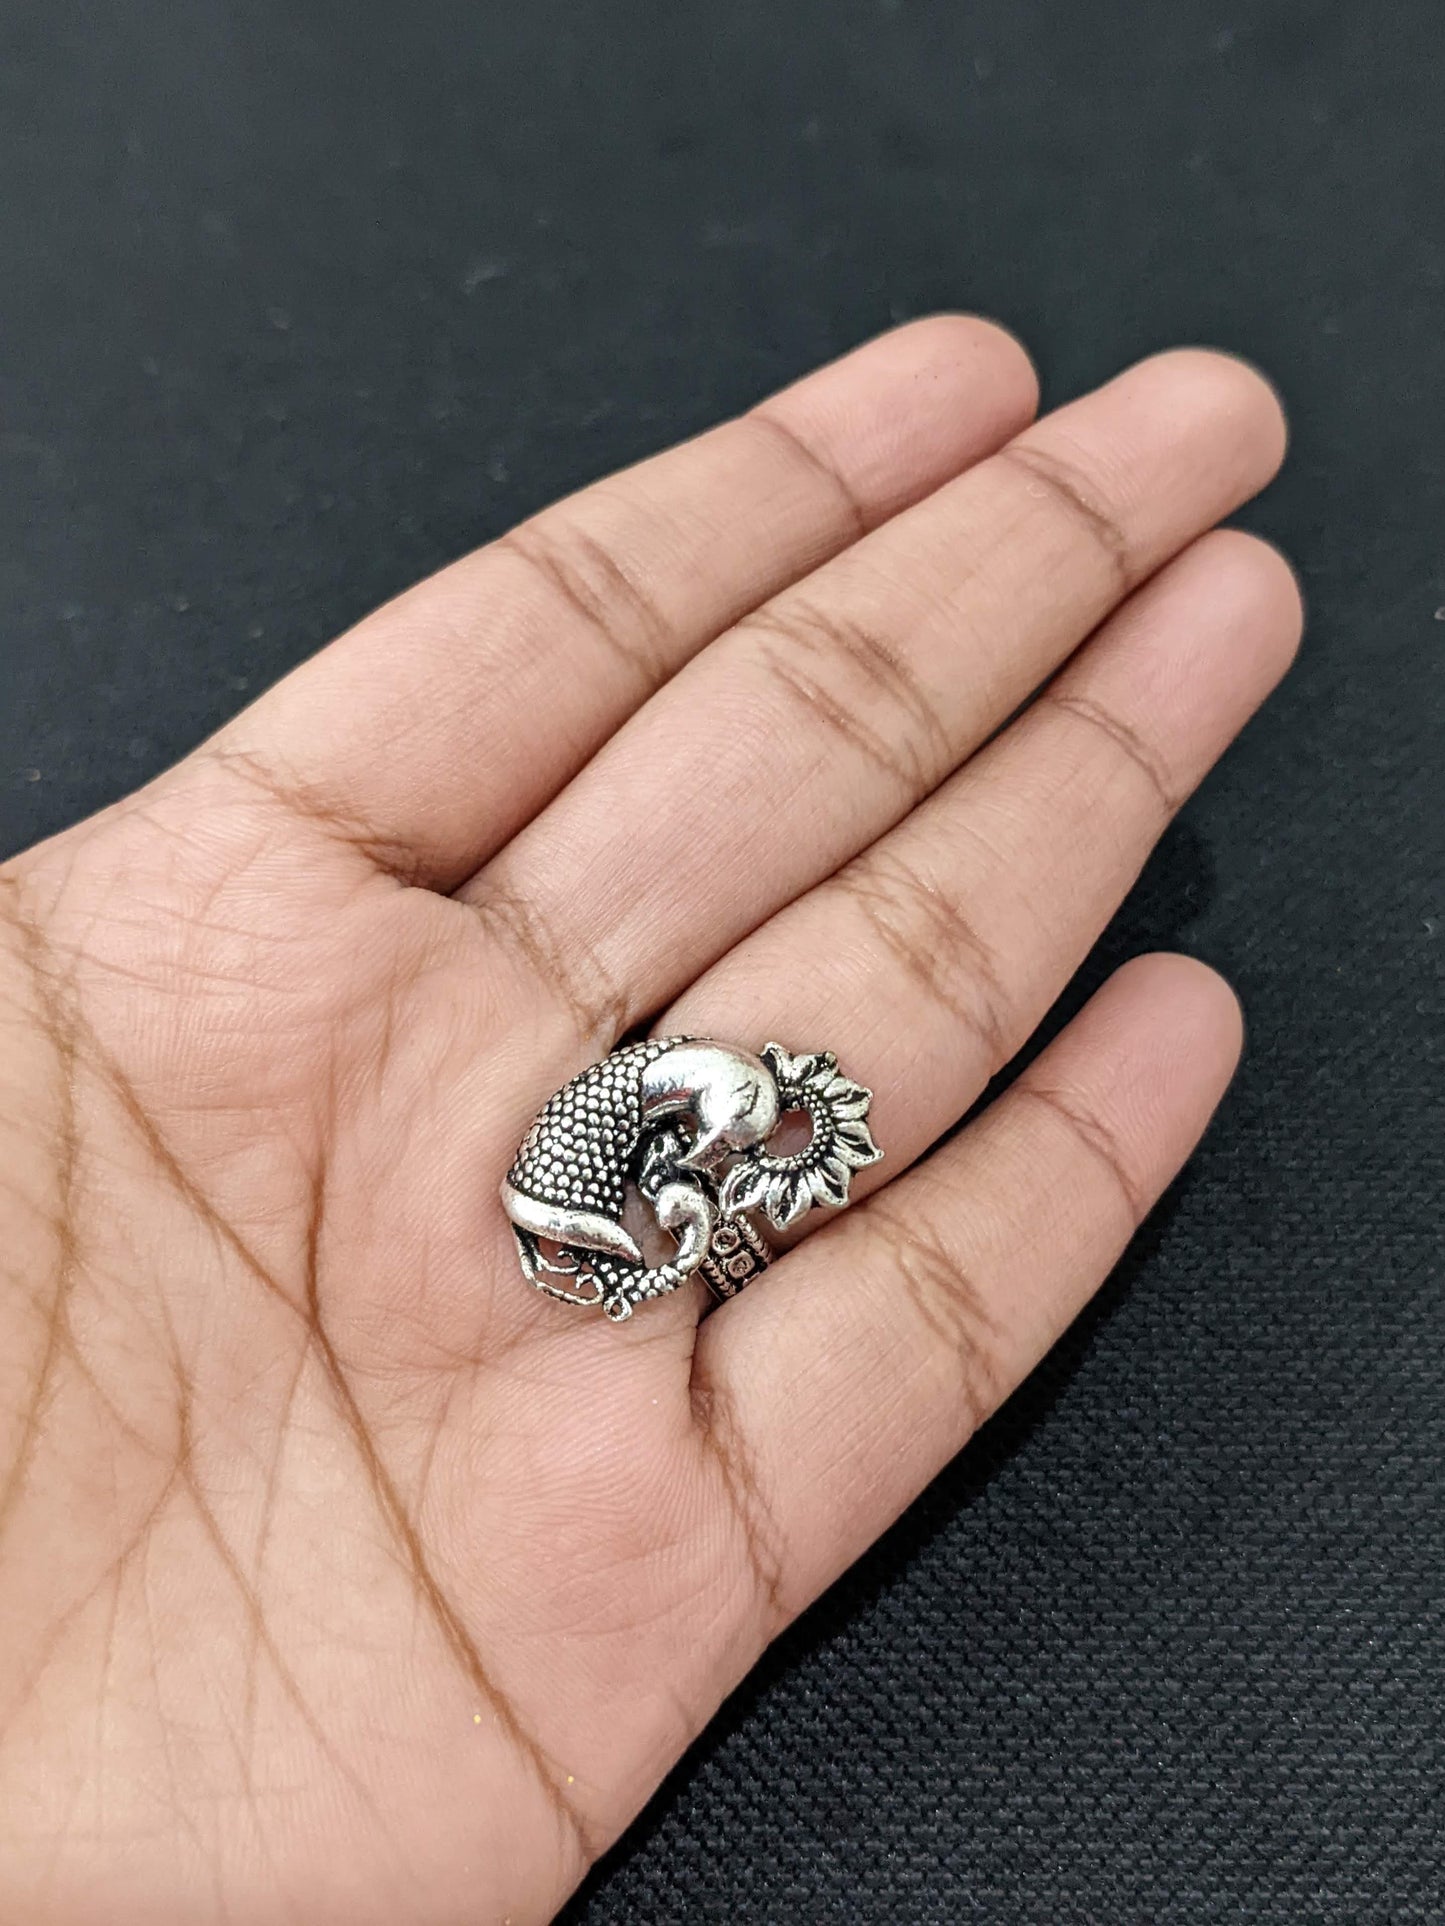 Oxidized Silver Peacock design Adjustable Finger ring - 3 designs